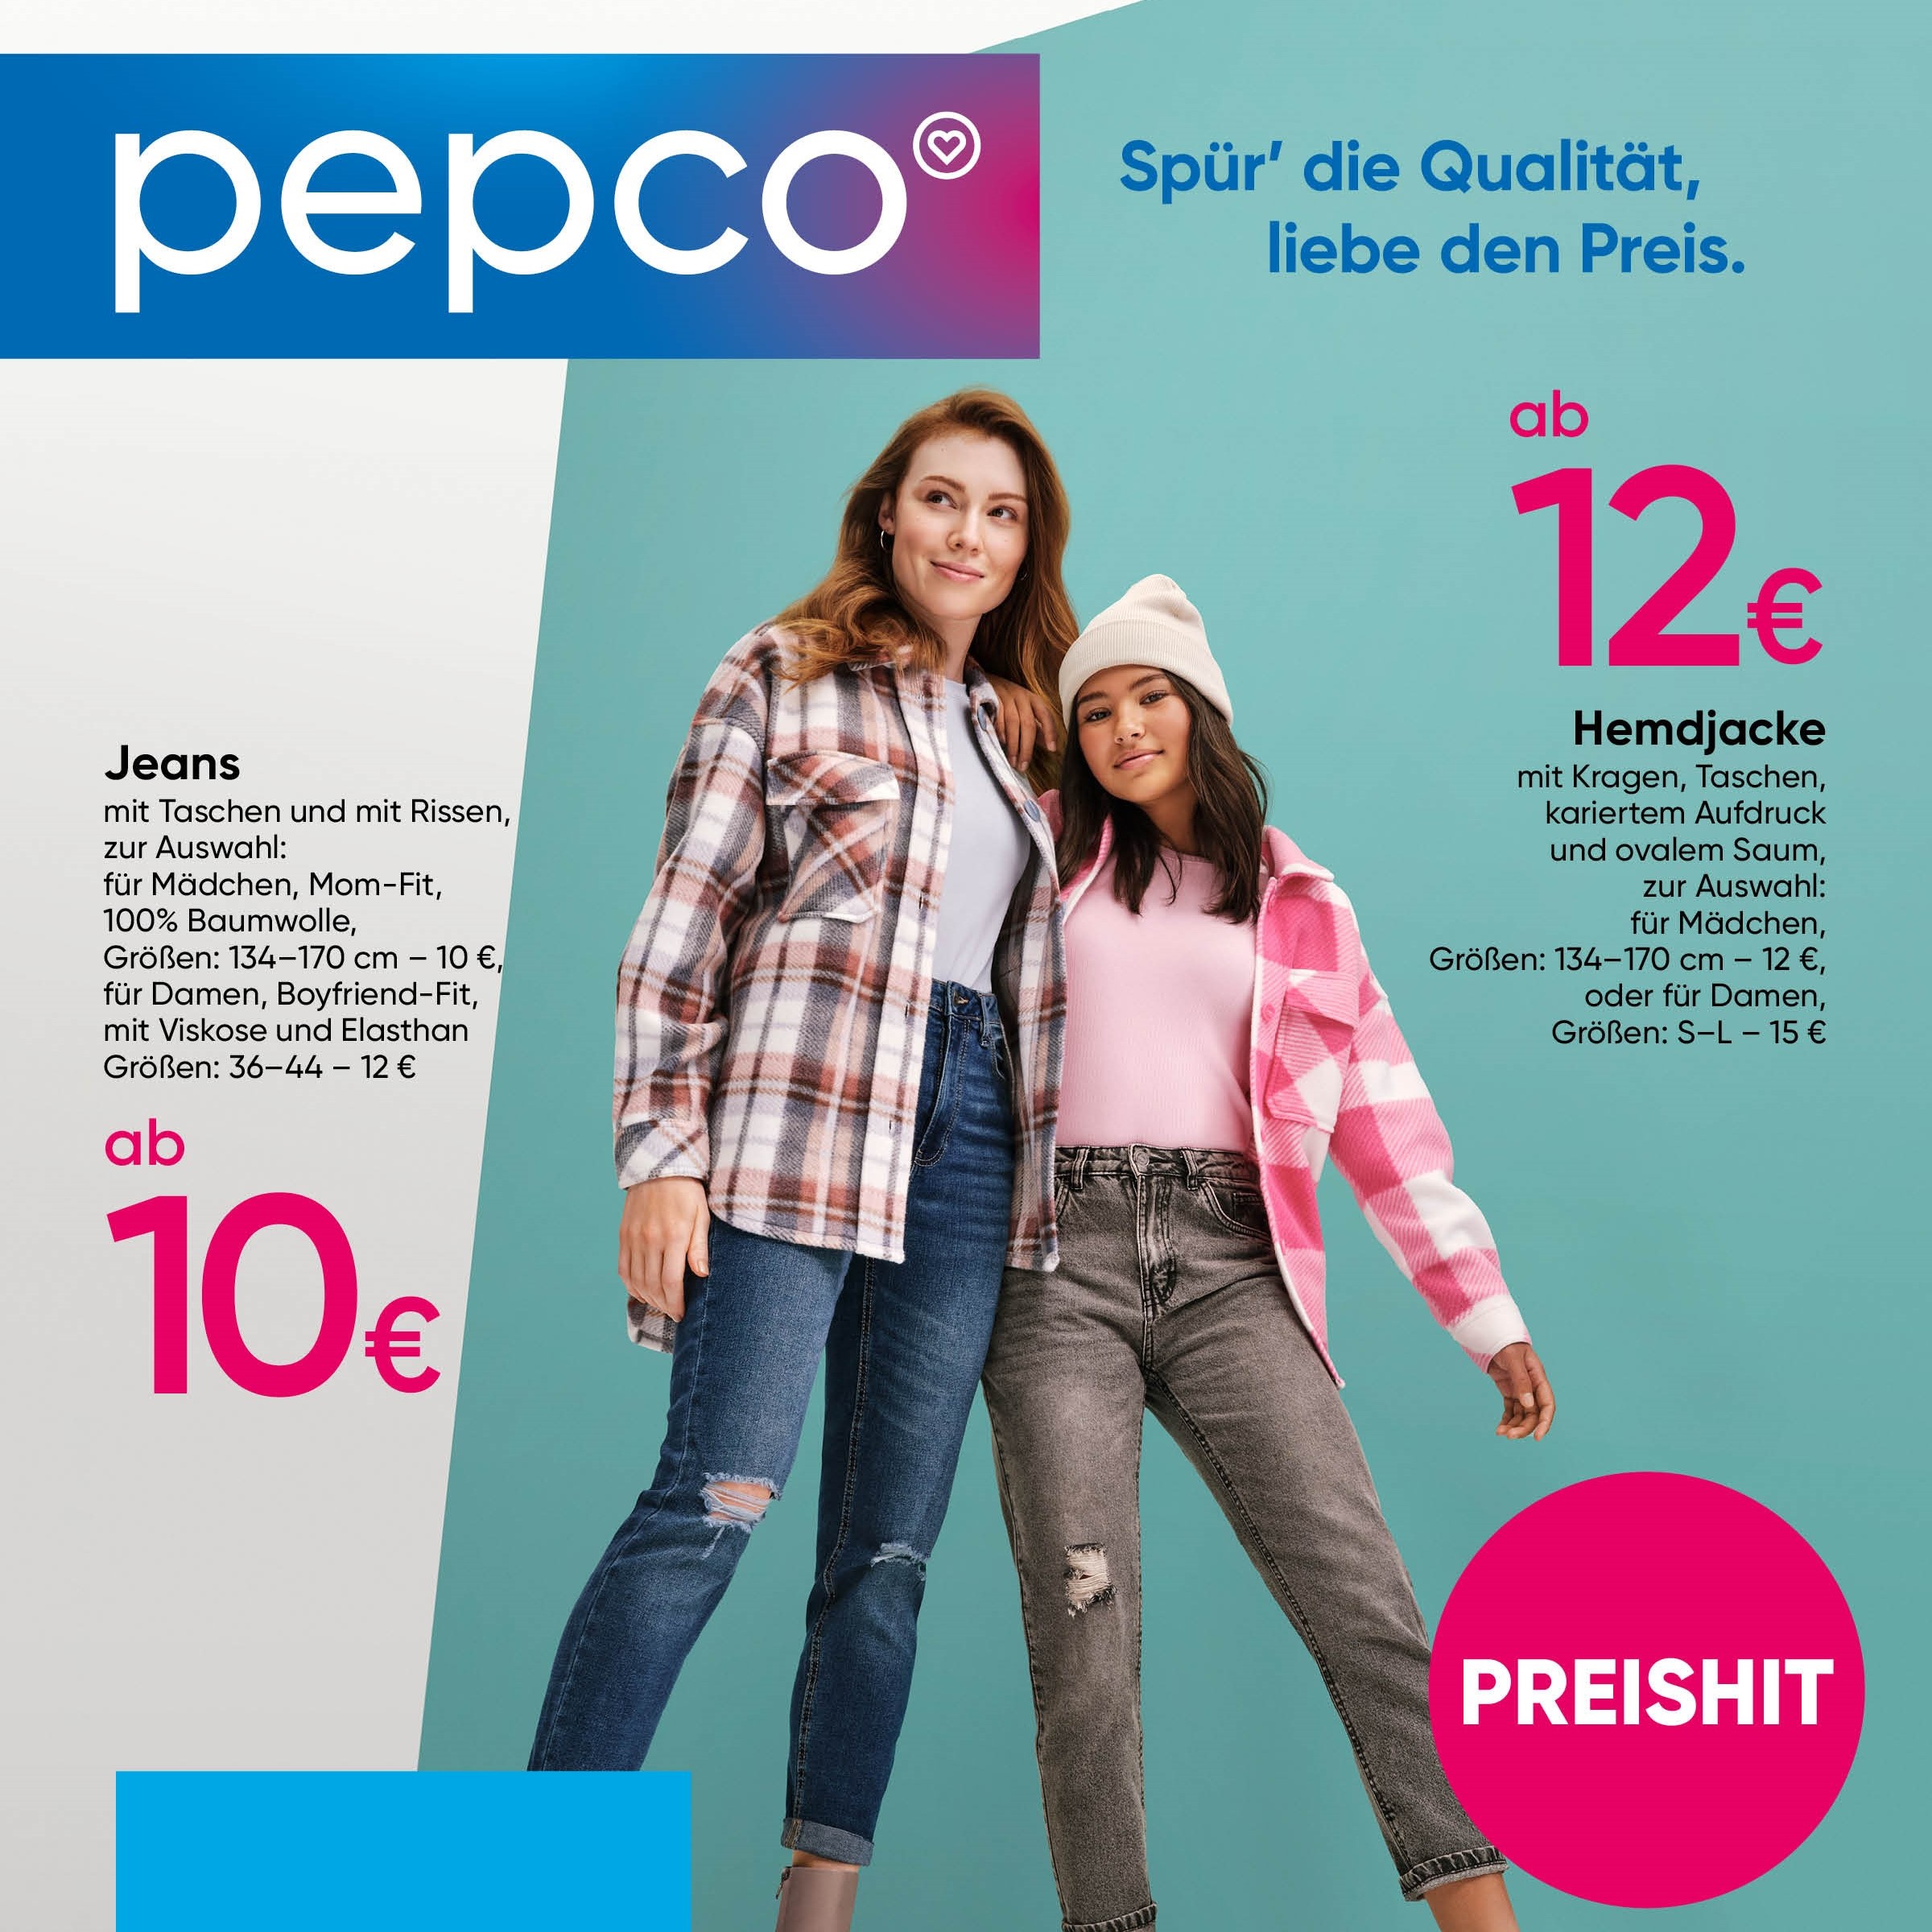 PEPCO P50 Promotion Event